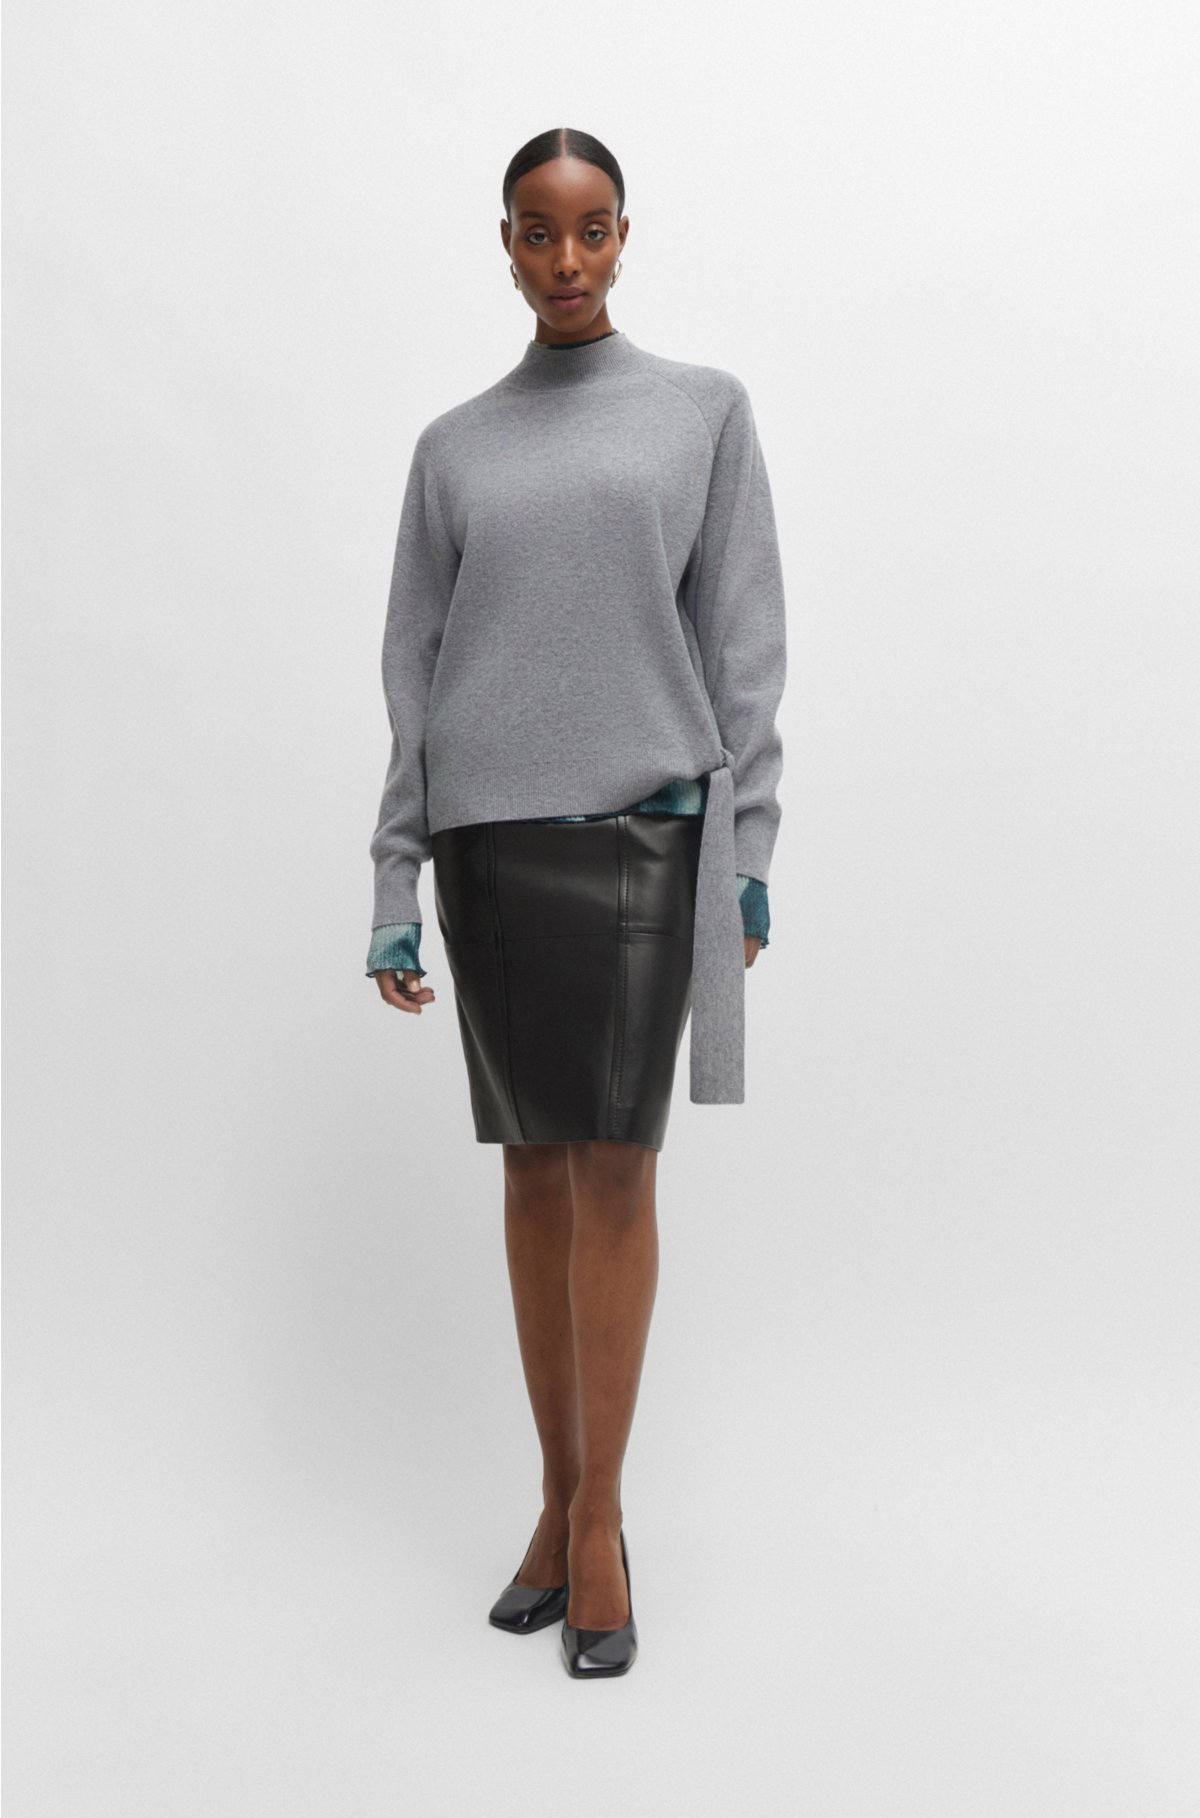 Seam-detail pencil skirt in lamb leather, Black